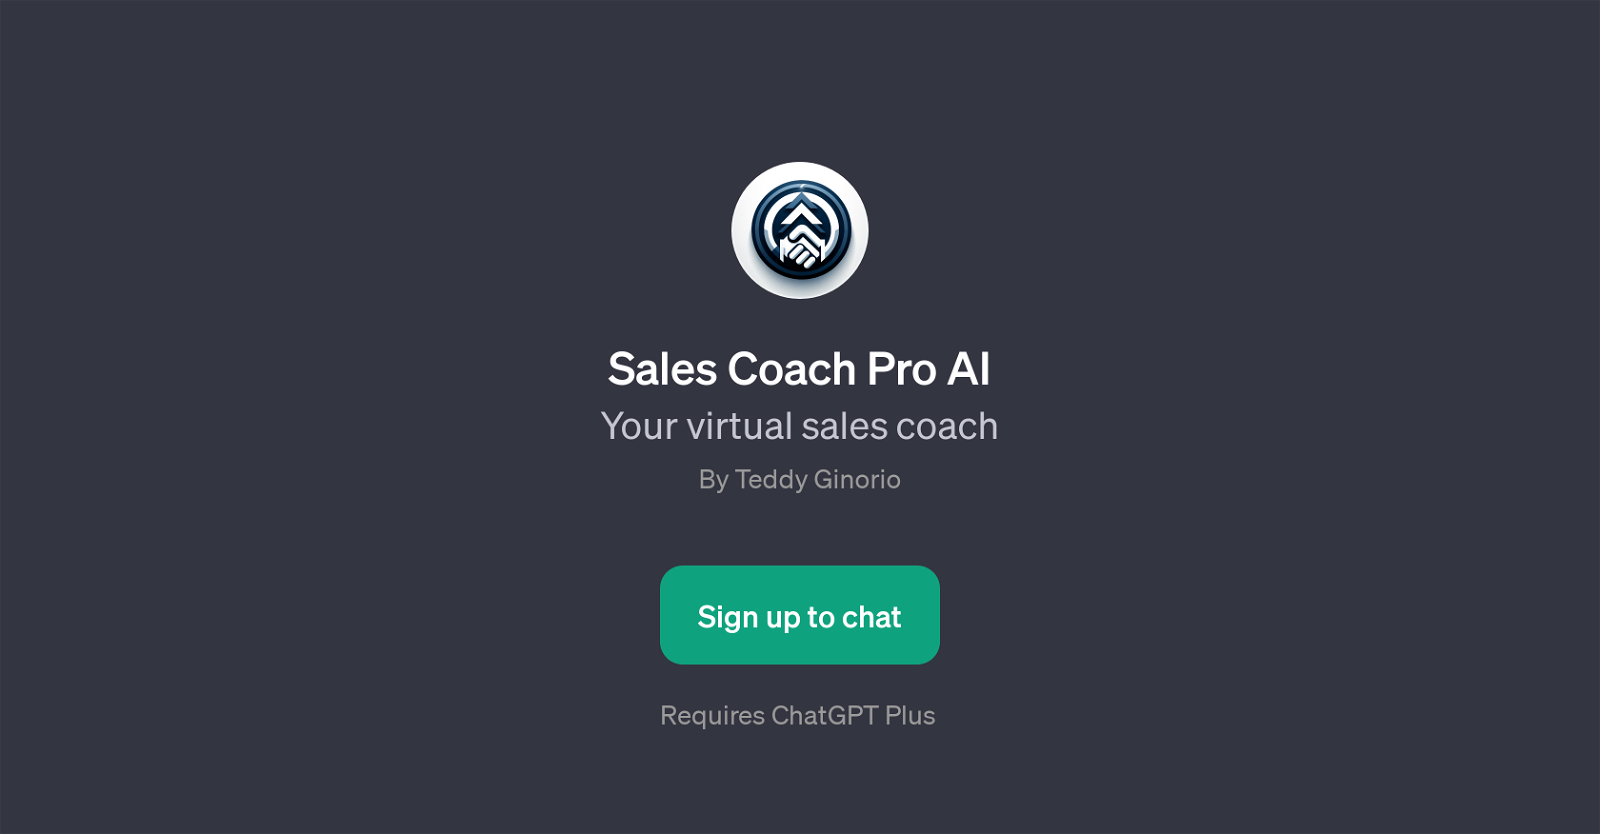 Sales Coach Pro AI website